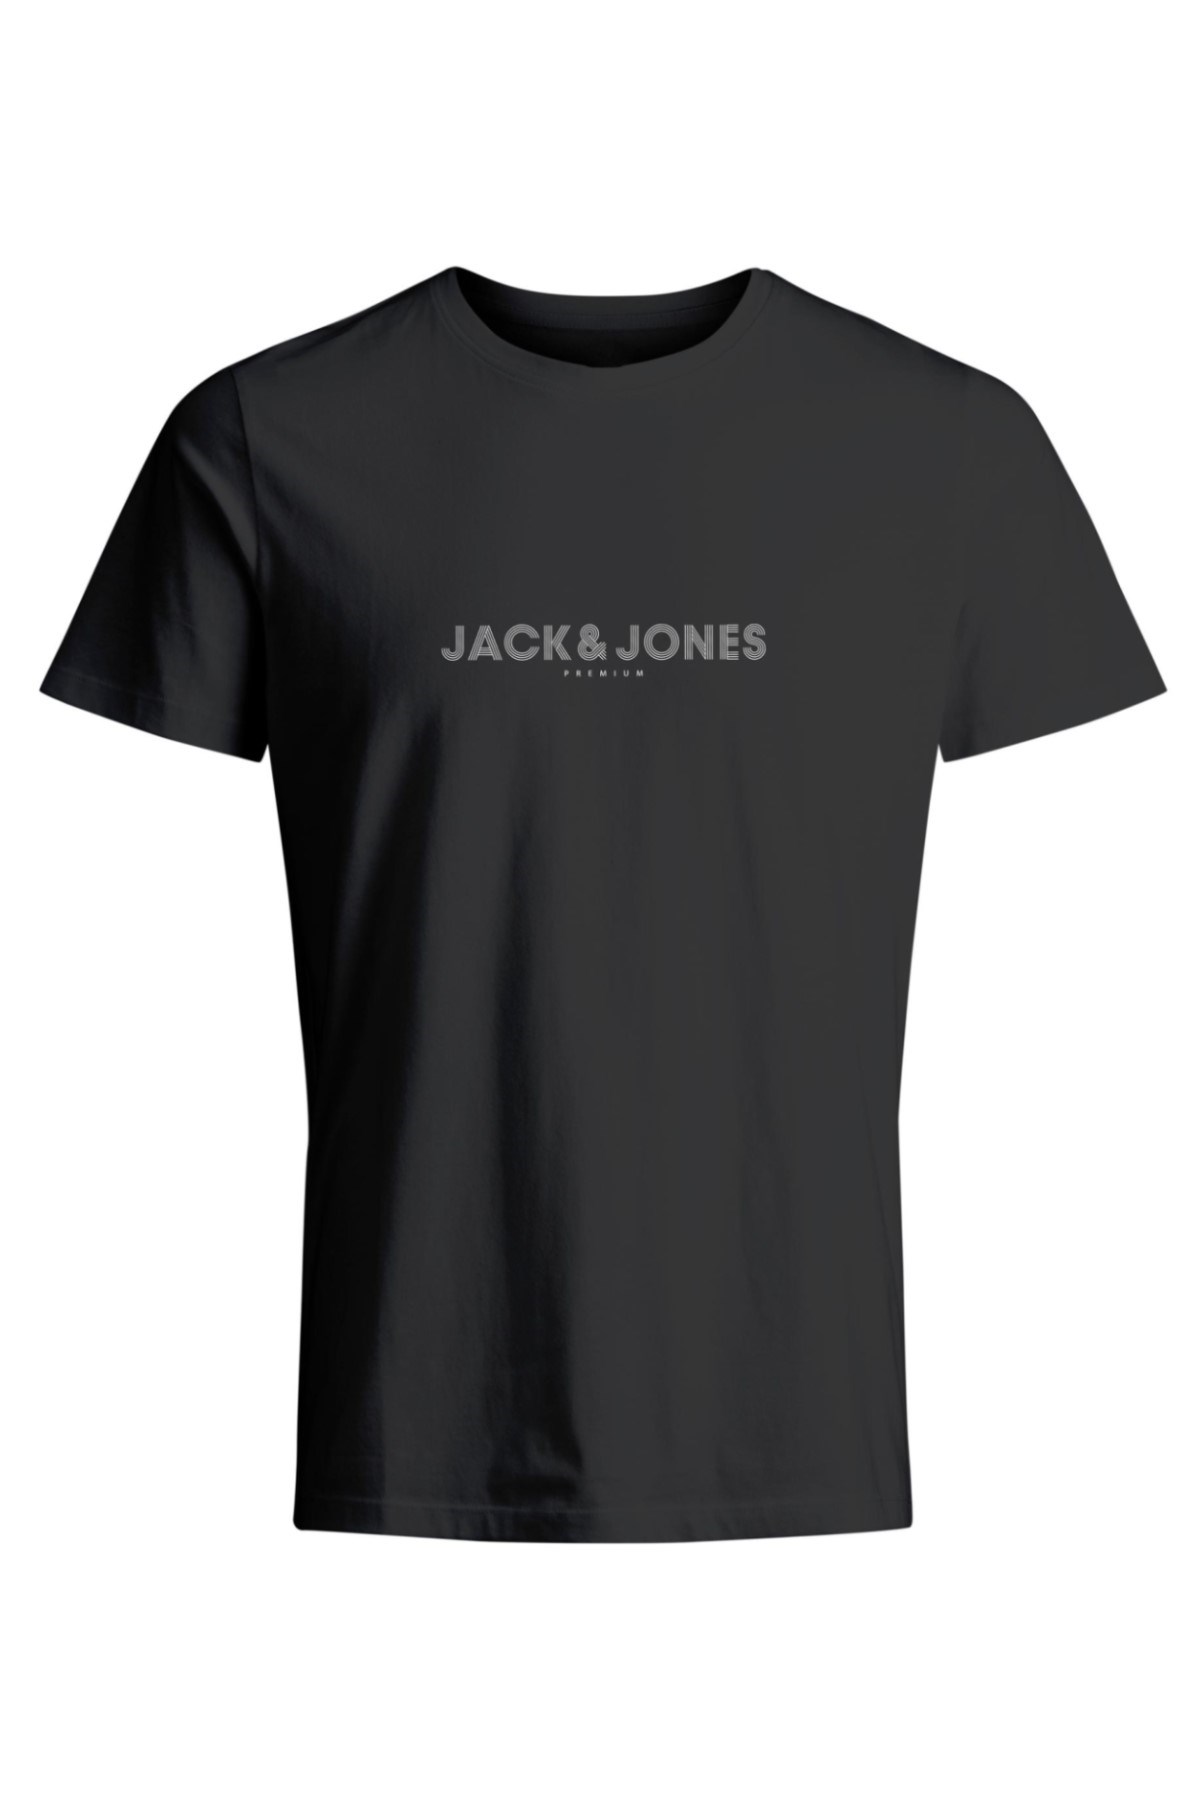 Jack Jones Erkek T-Shirt 12208467 Black